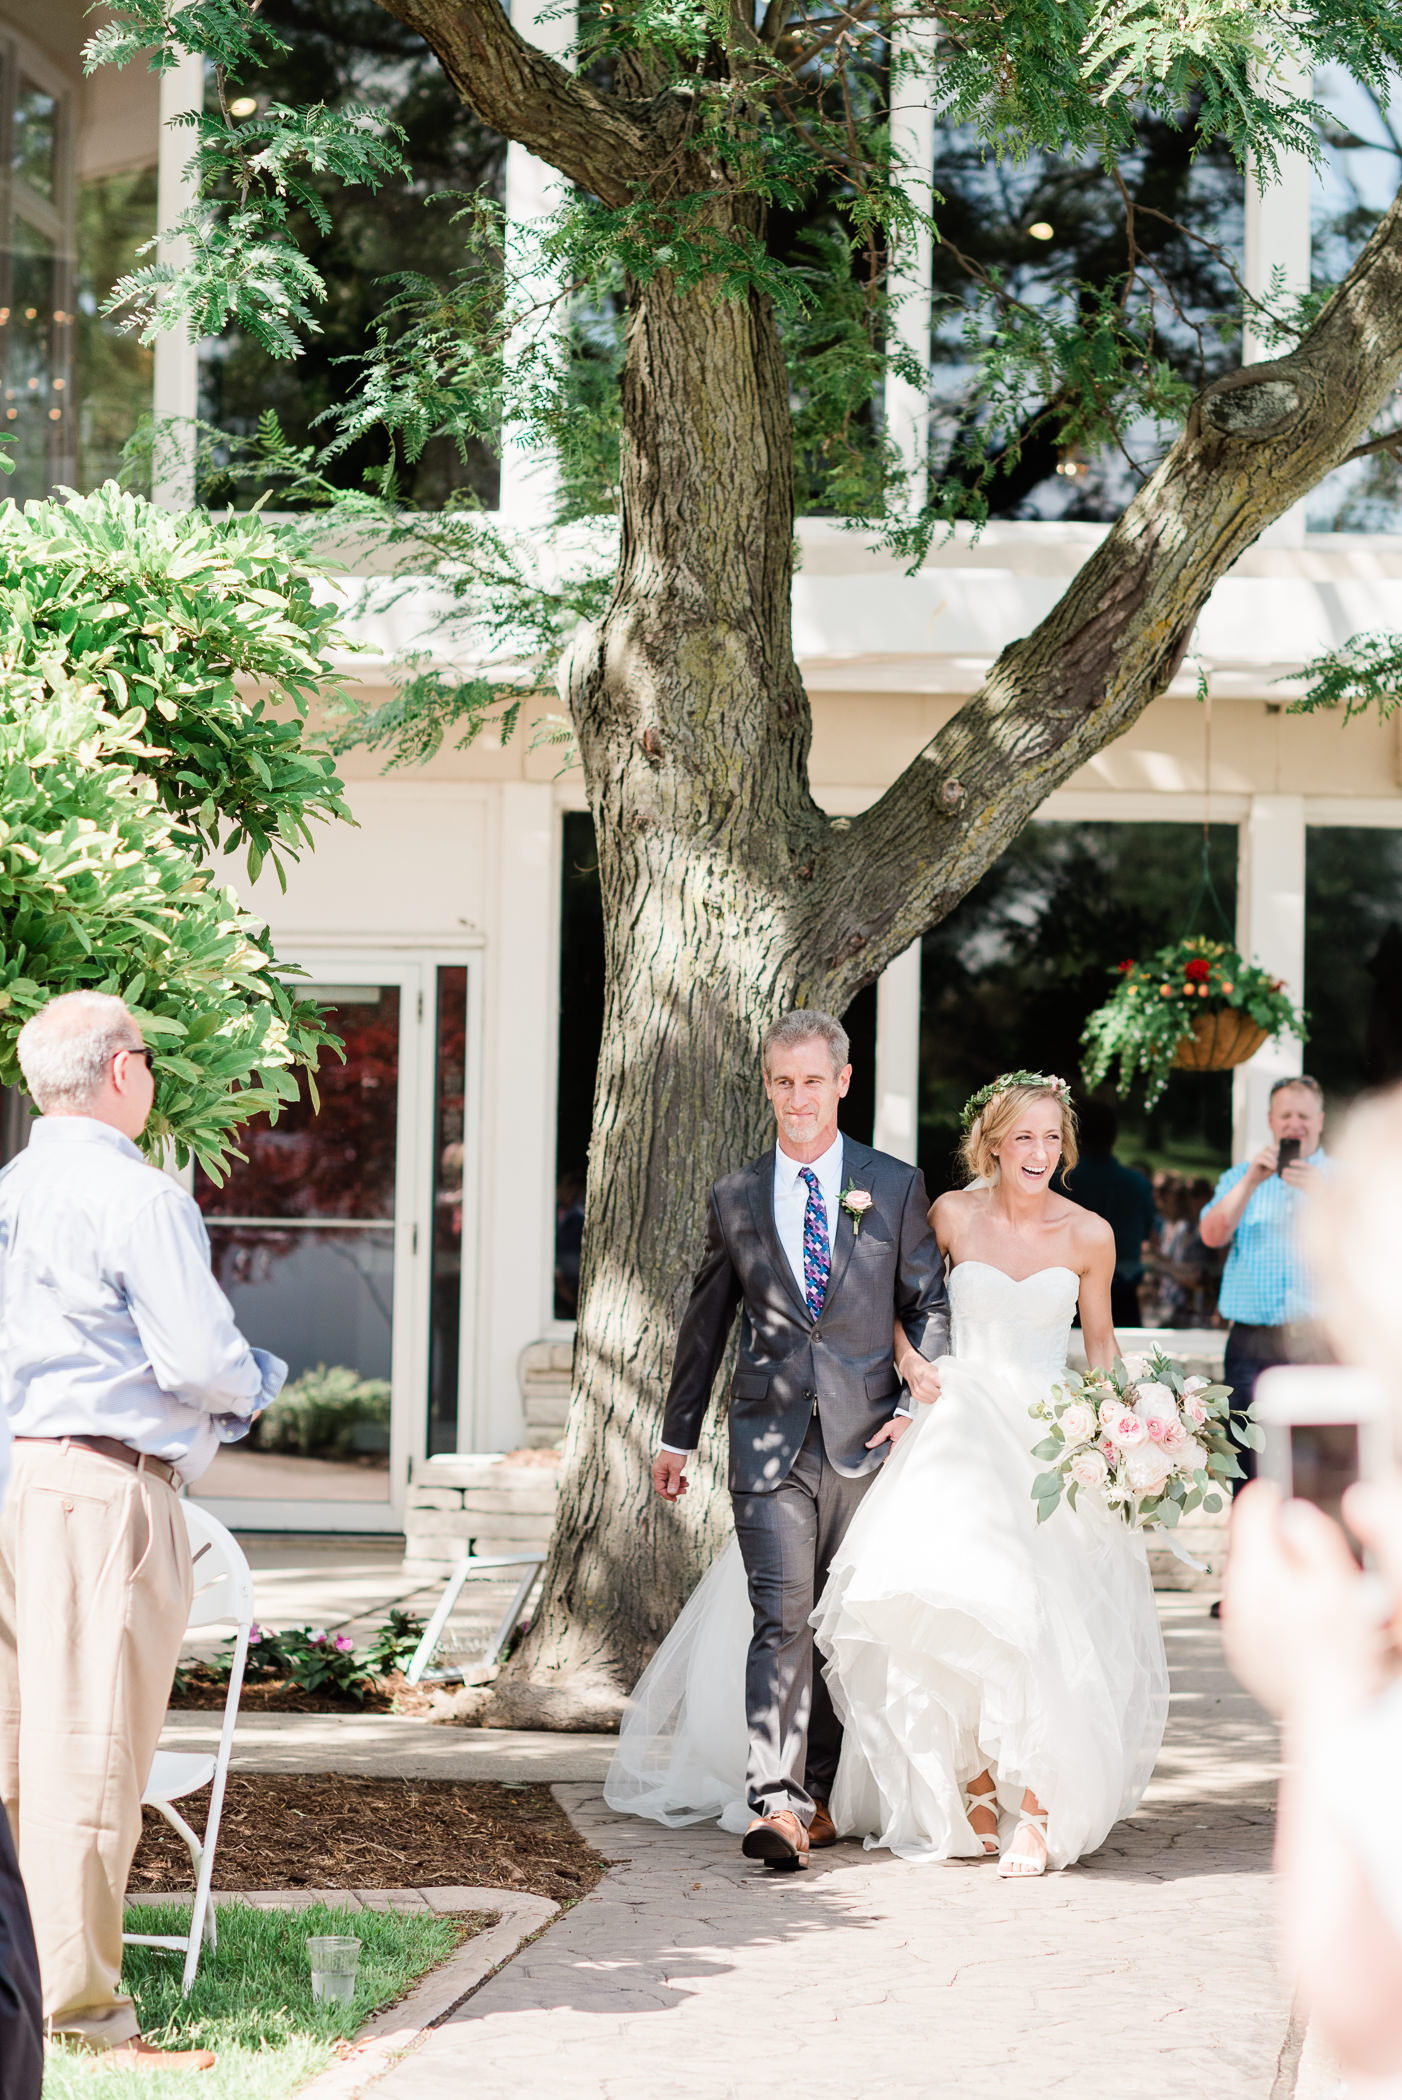 Lake Windsor Country Club Wedding Photographers - Larissa Marie Photography